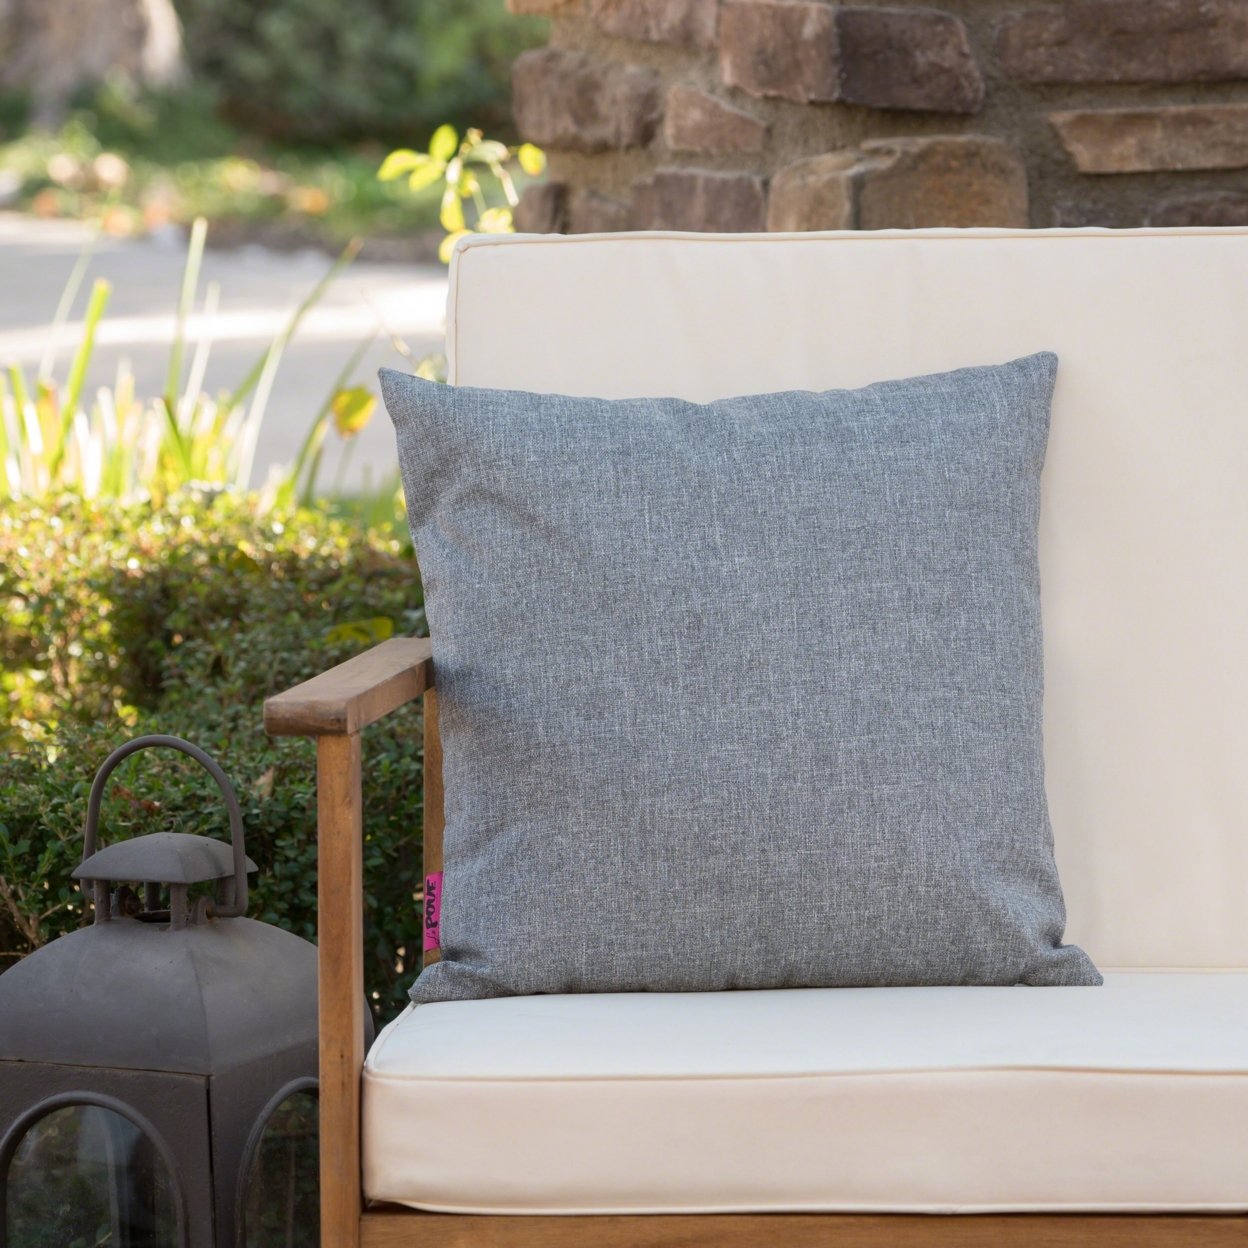 Coronado Outdoor Water Resistant Square Throw Pillow - Purple, Single